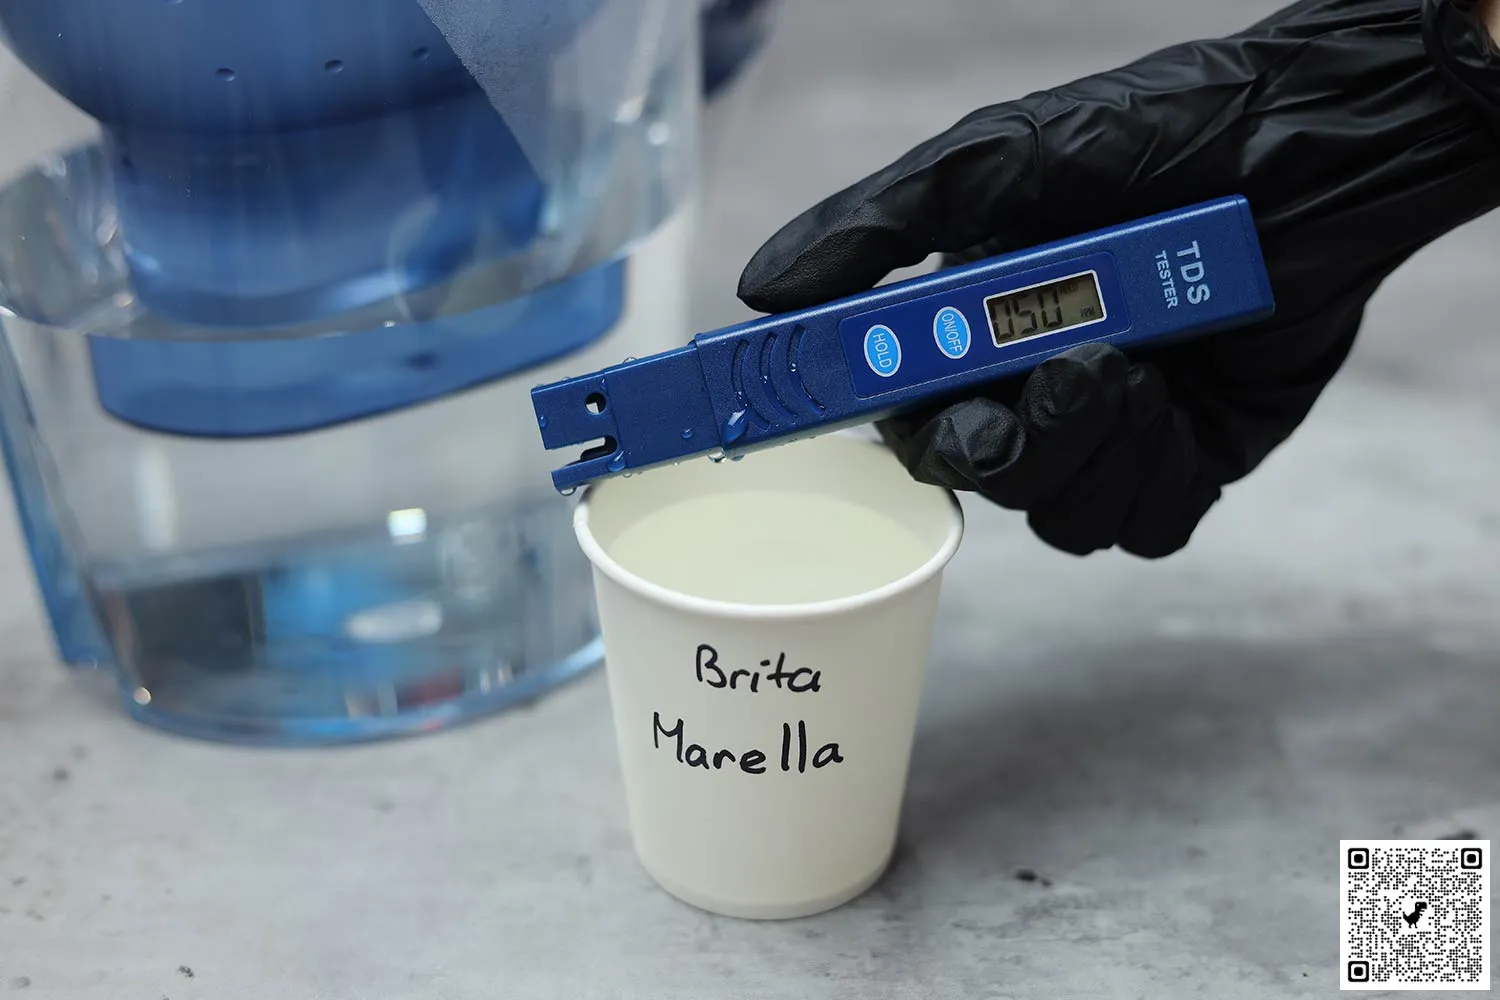 Mixed Feedback on BRITA Marella XL Water Filter Jug: Lid Fit, Water Taste,  and Delivery Concerns - Kimola